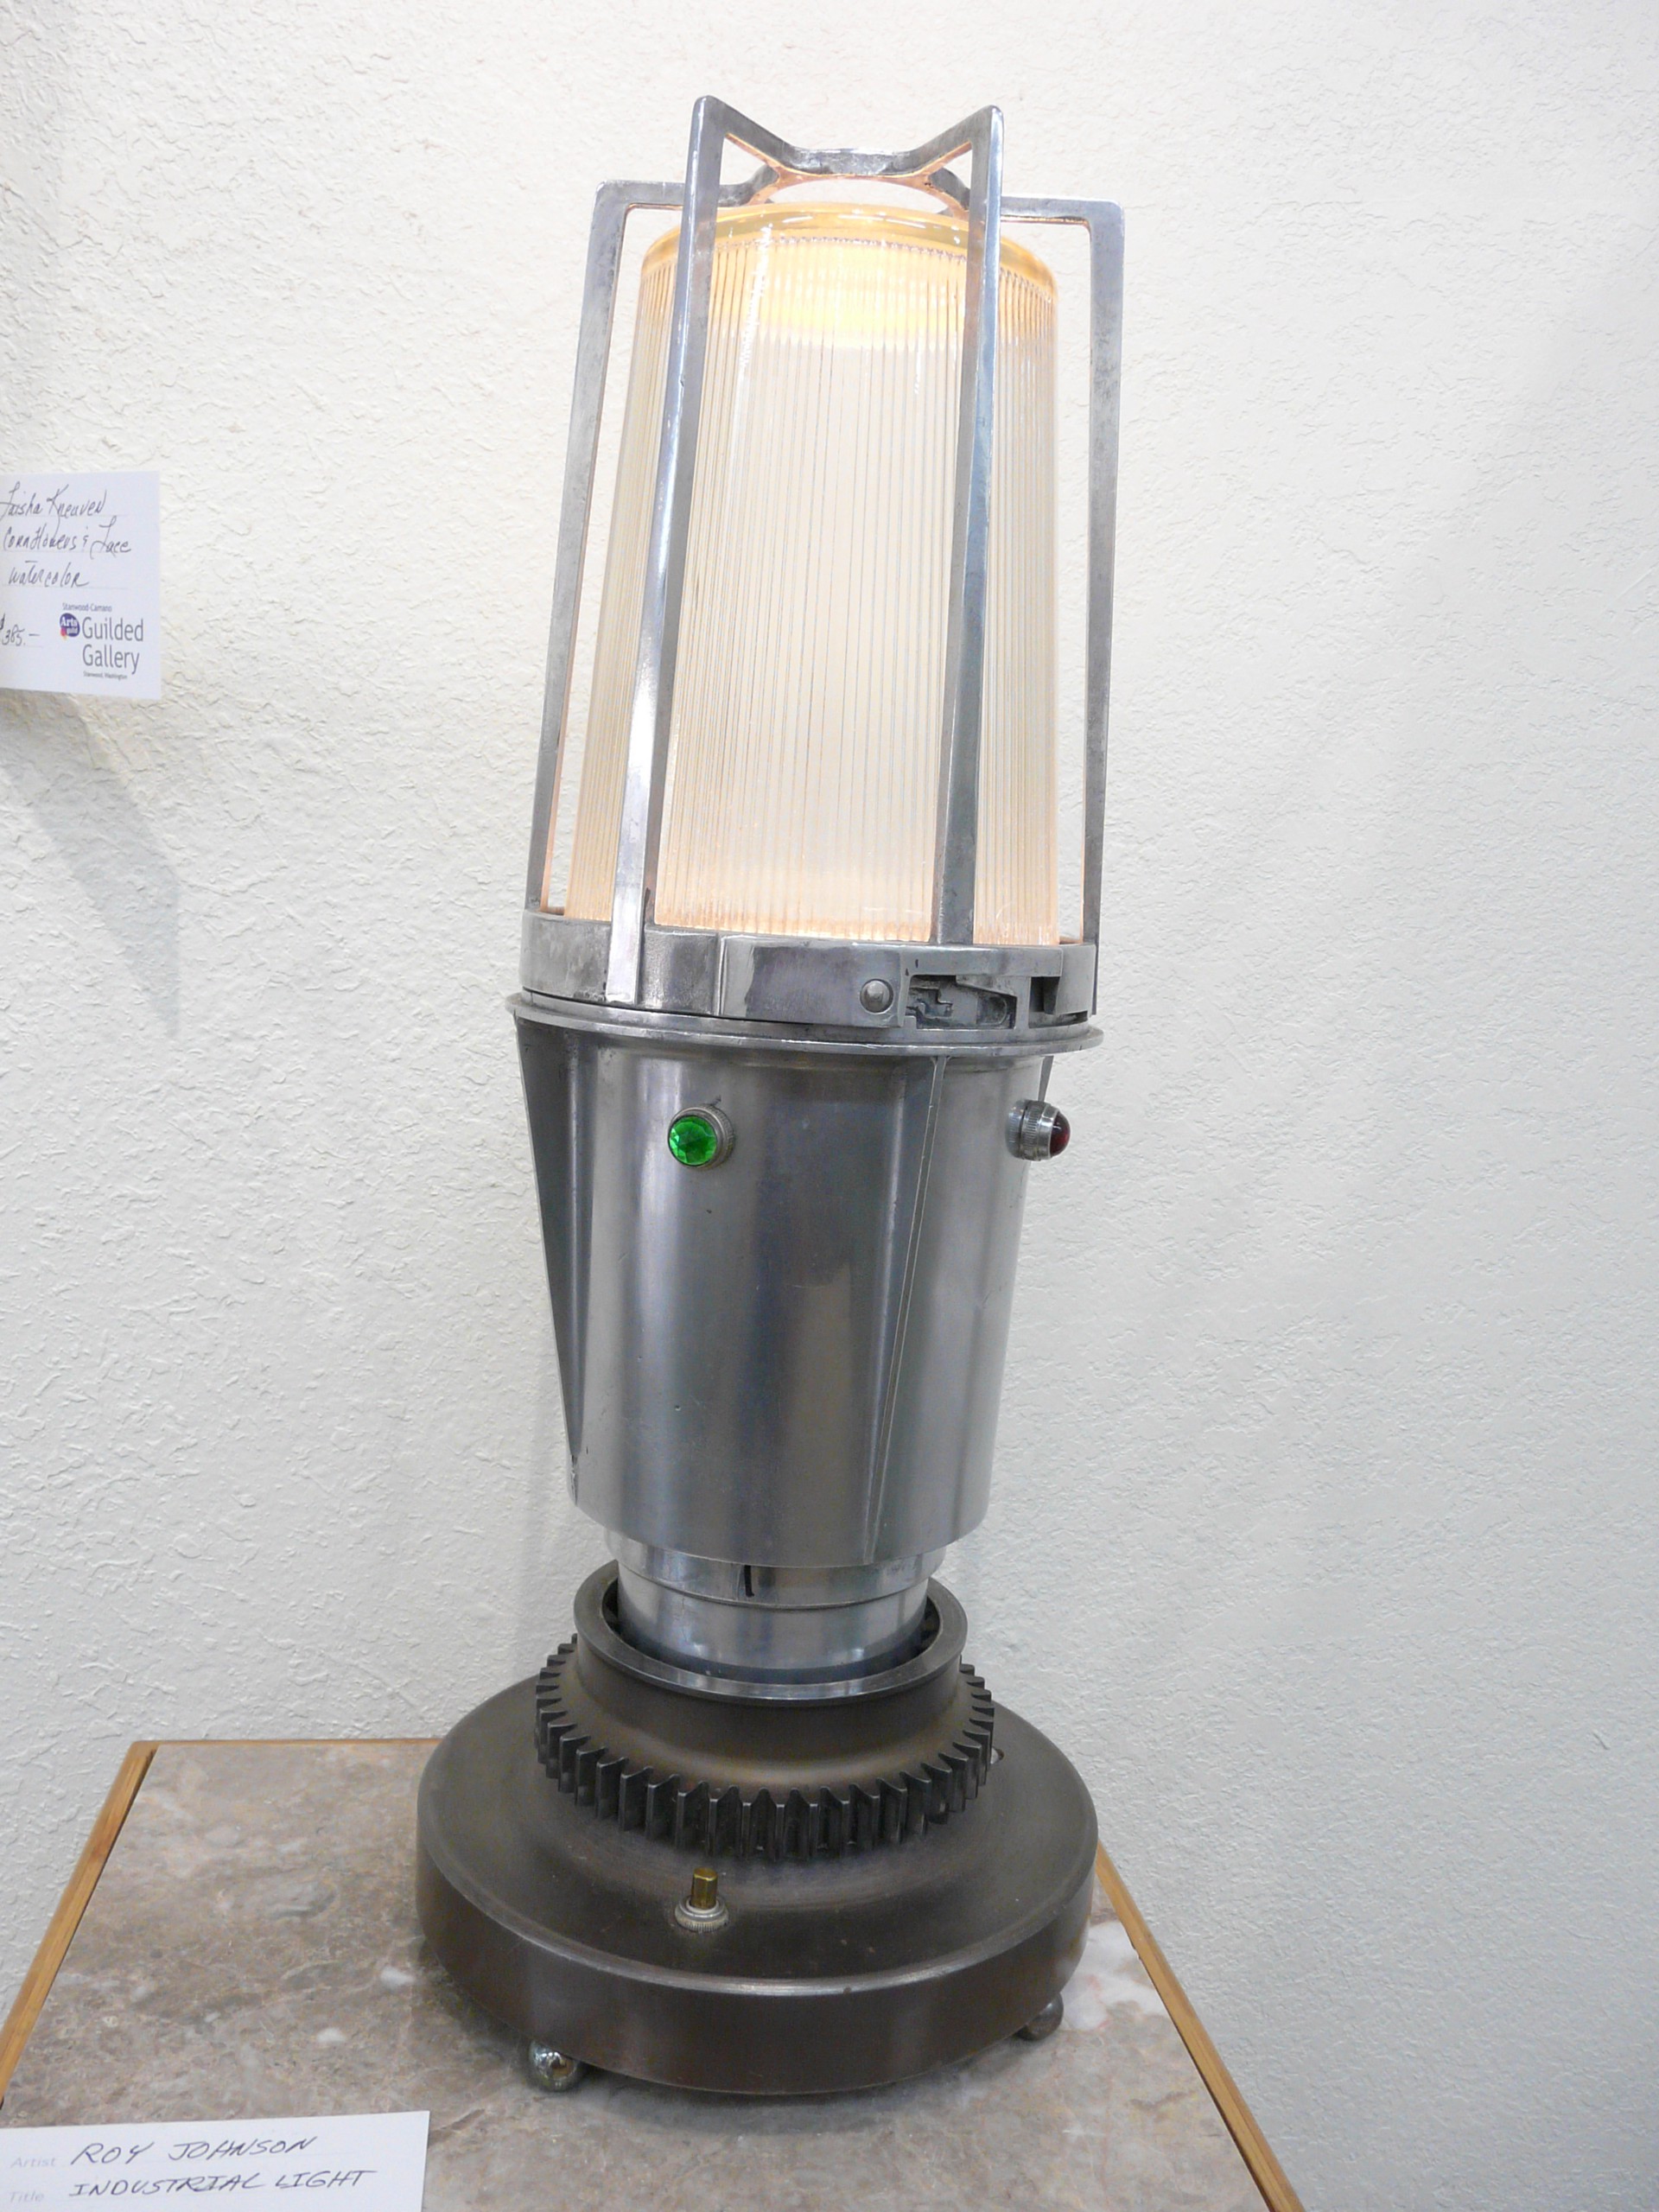 Rocket Lamp by Roy Johnson